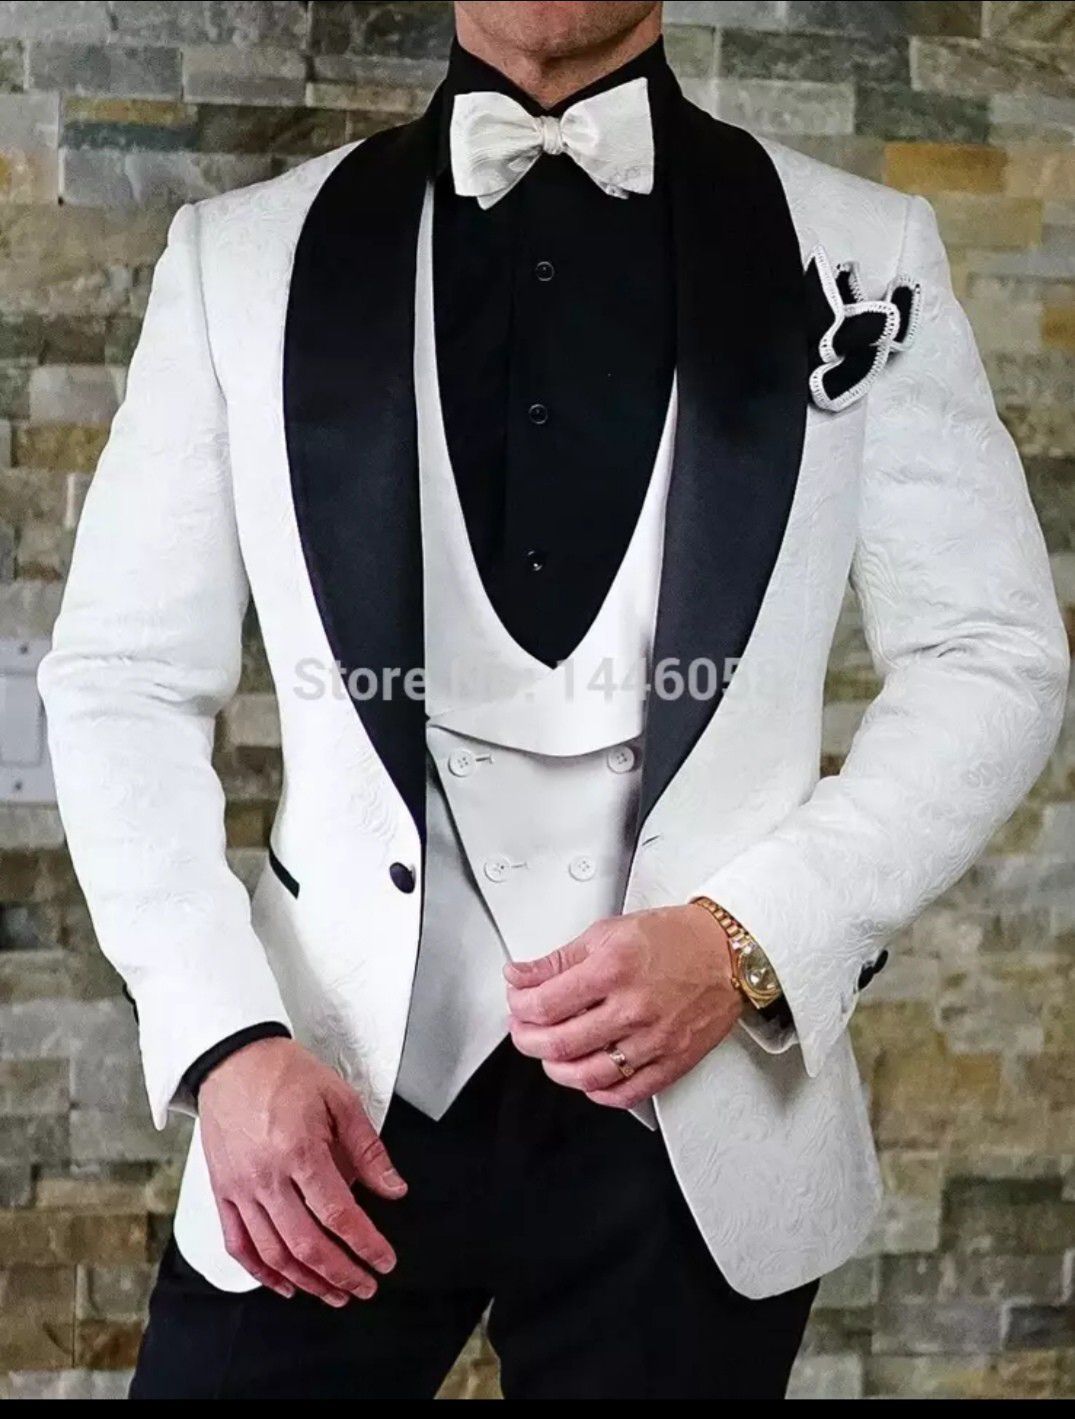 2018 Royal wedding suits for men